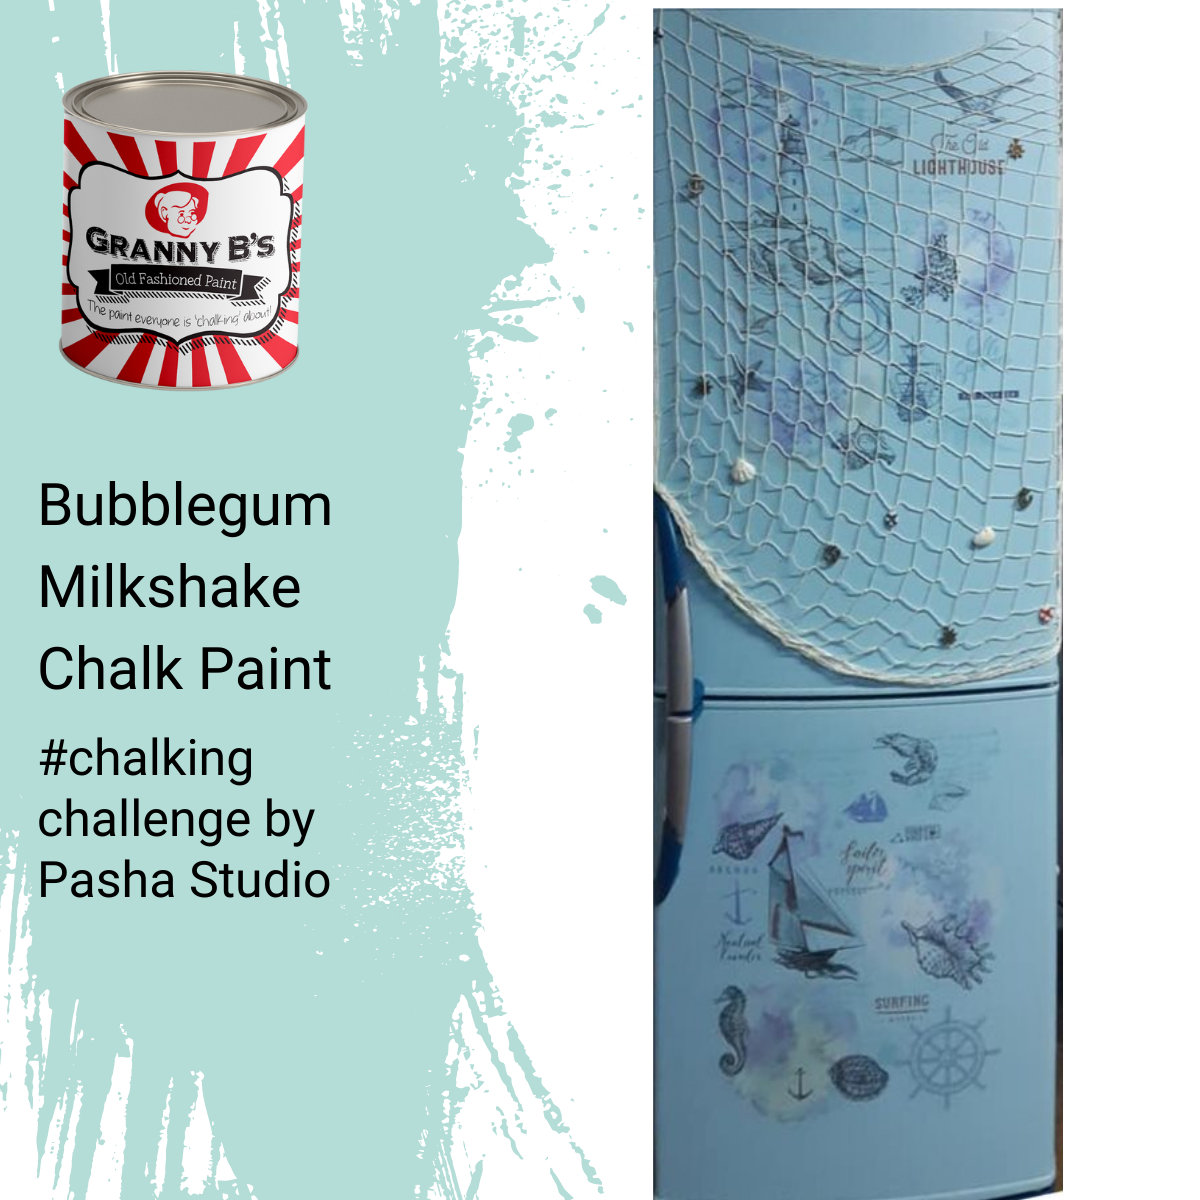 Old Fashioned Paint - Bubblegum Milkshake (Pale Blue) - Granny B's Old Fashioned Paint